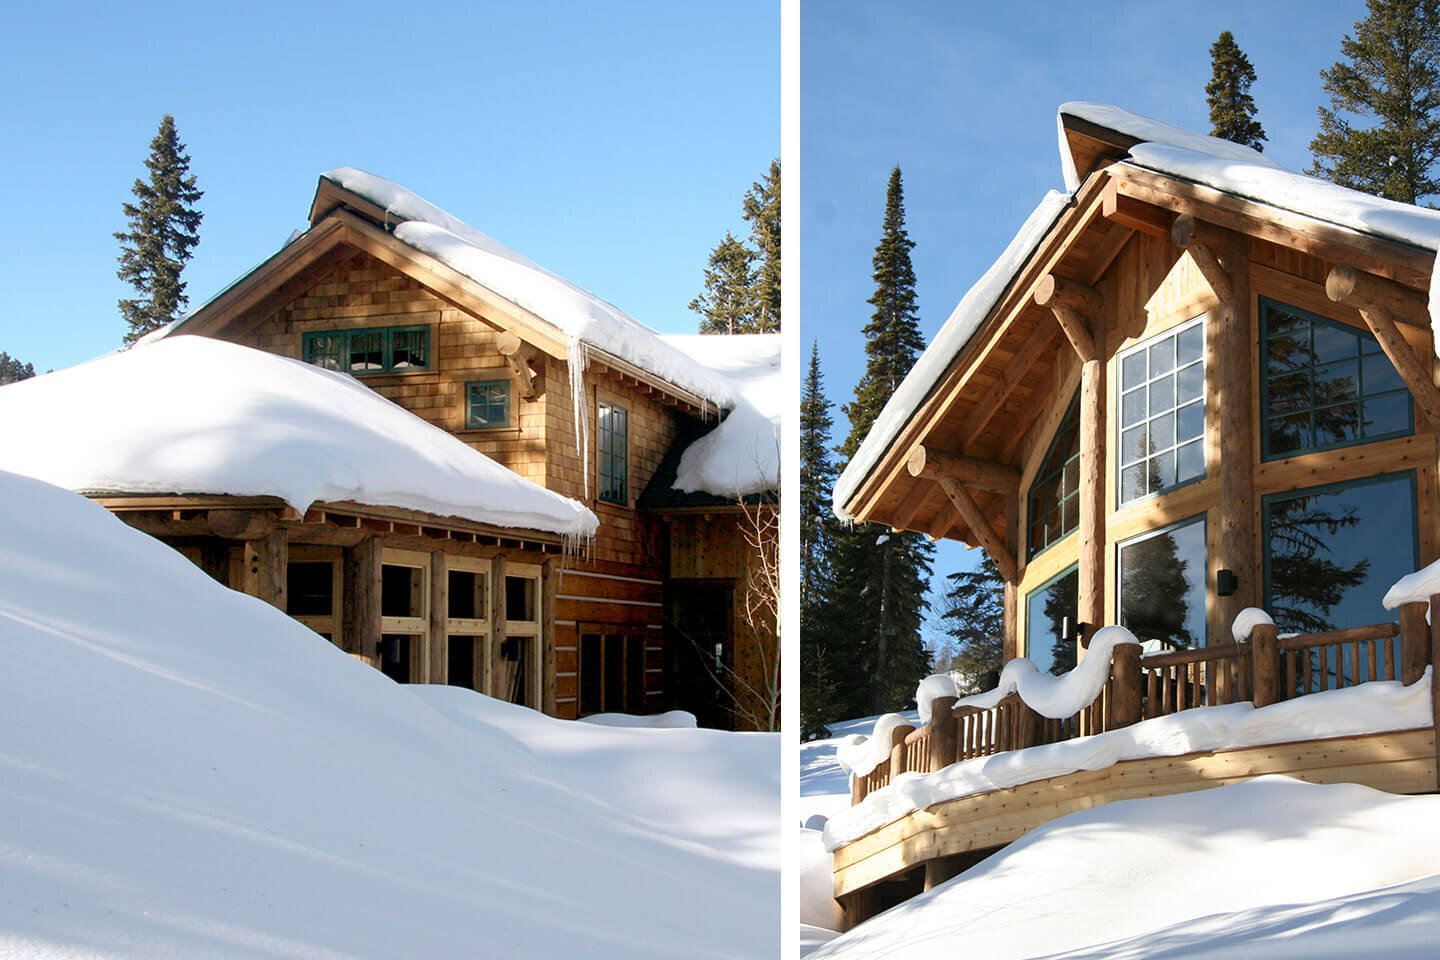 Ski lodge under heavy snow